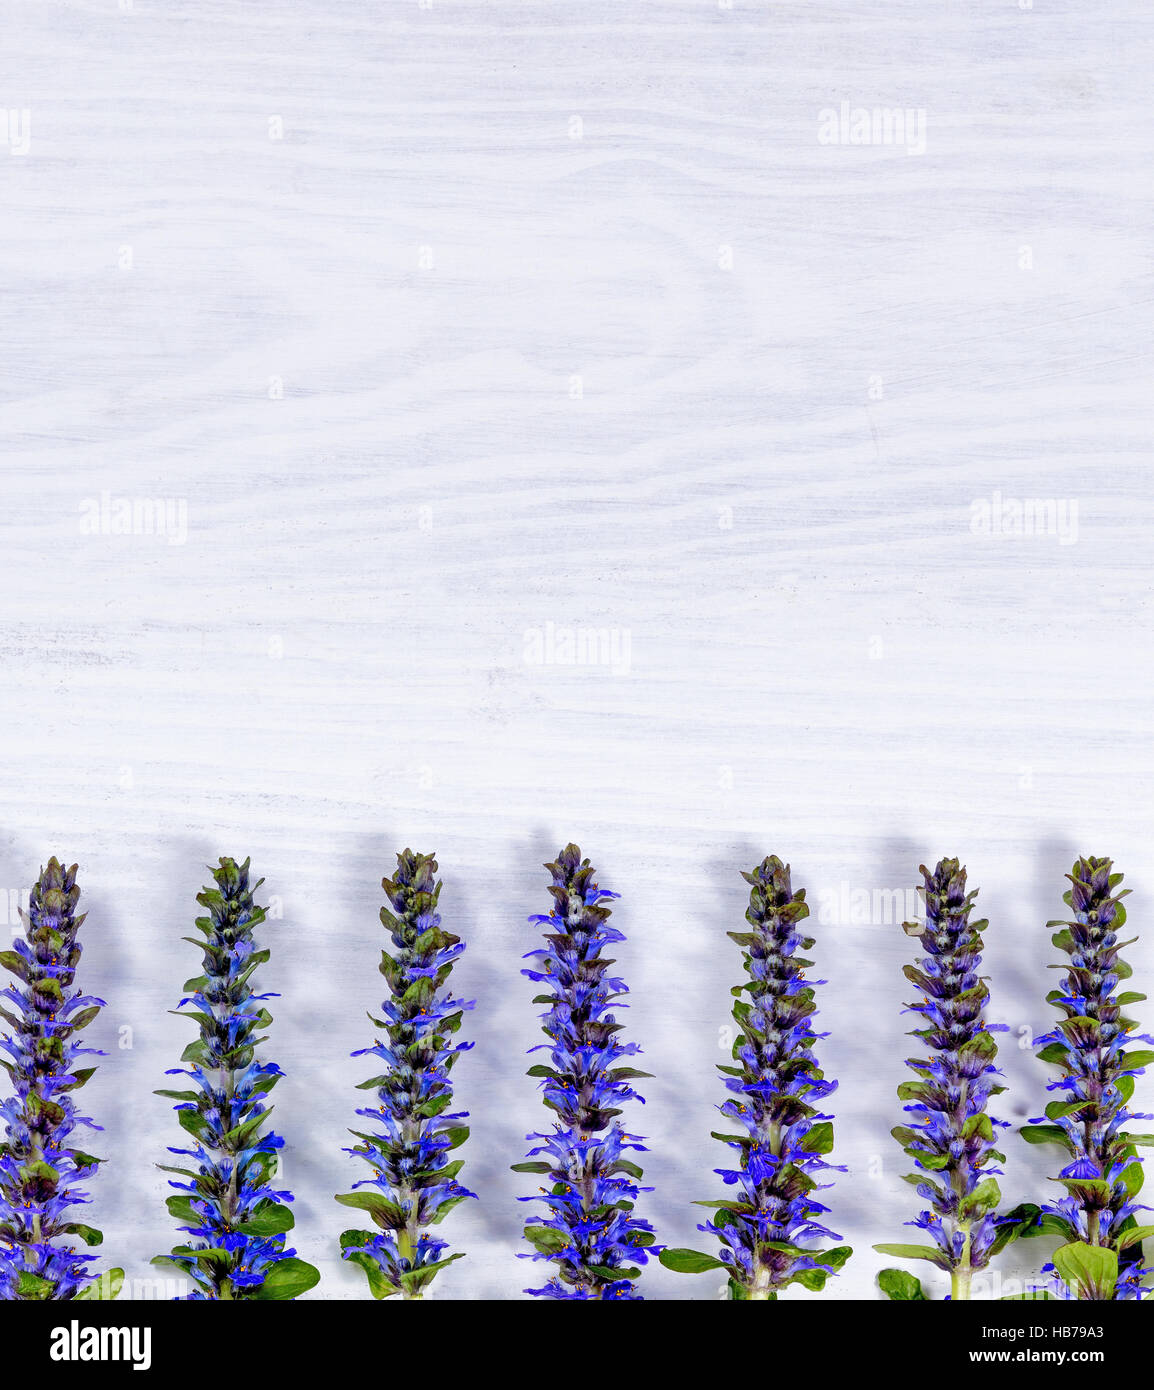 Blue wild flowers on white wood background Stock Photo